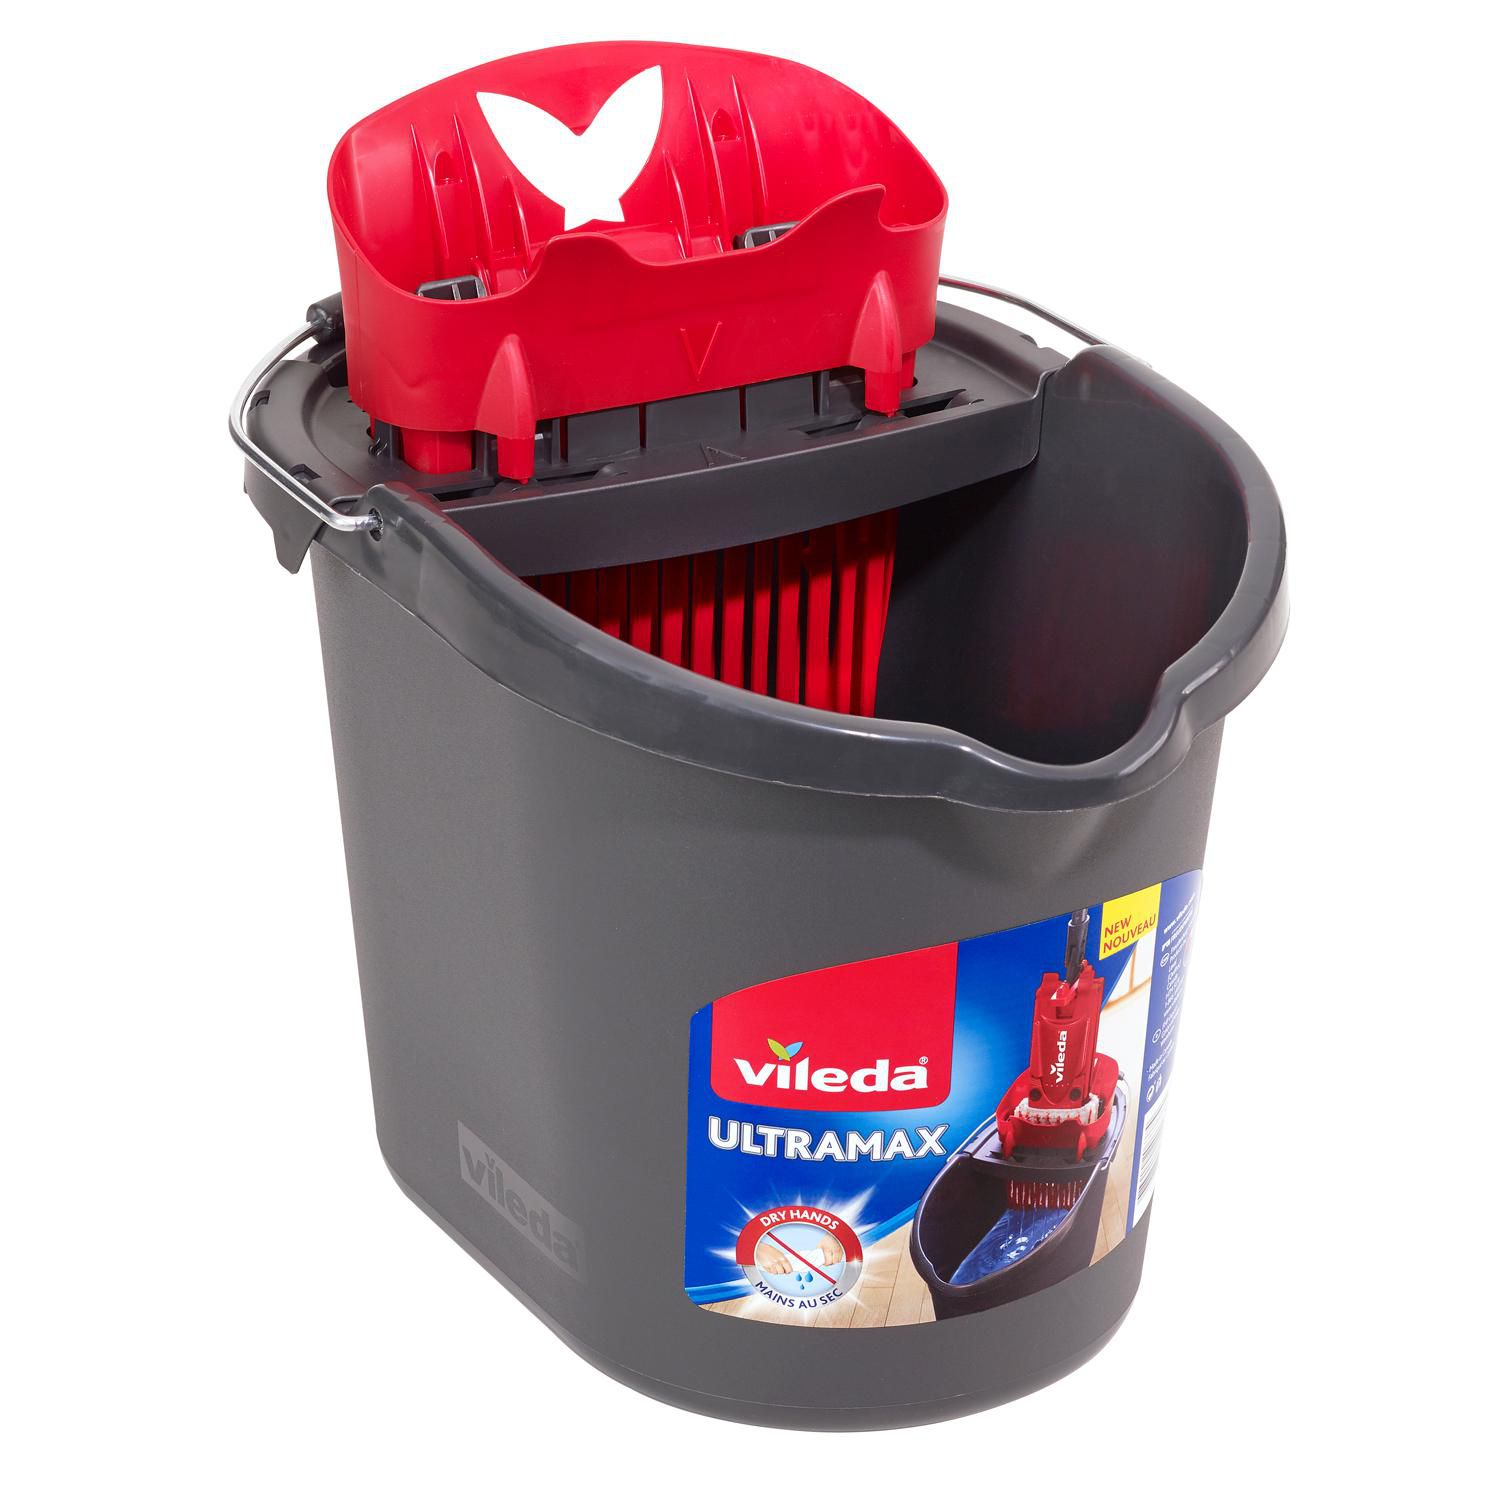 New Ultramax Vileda Flat Mop With Bucket Complete Set Ultramax System